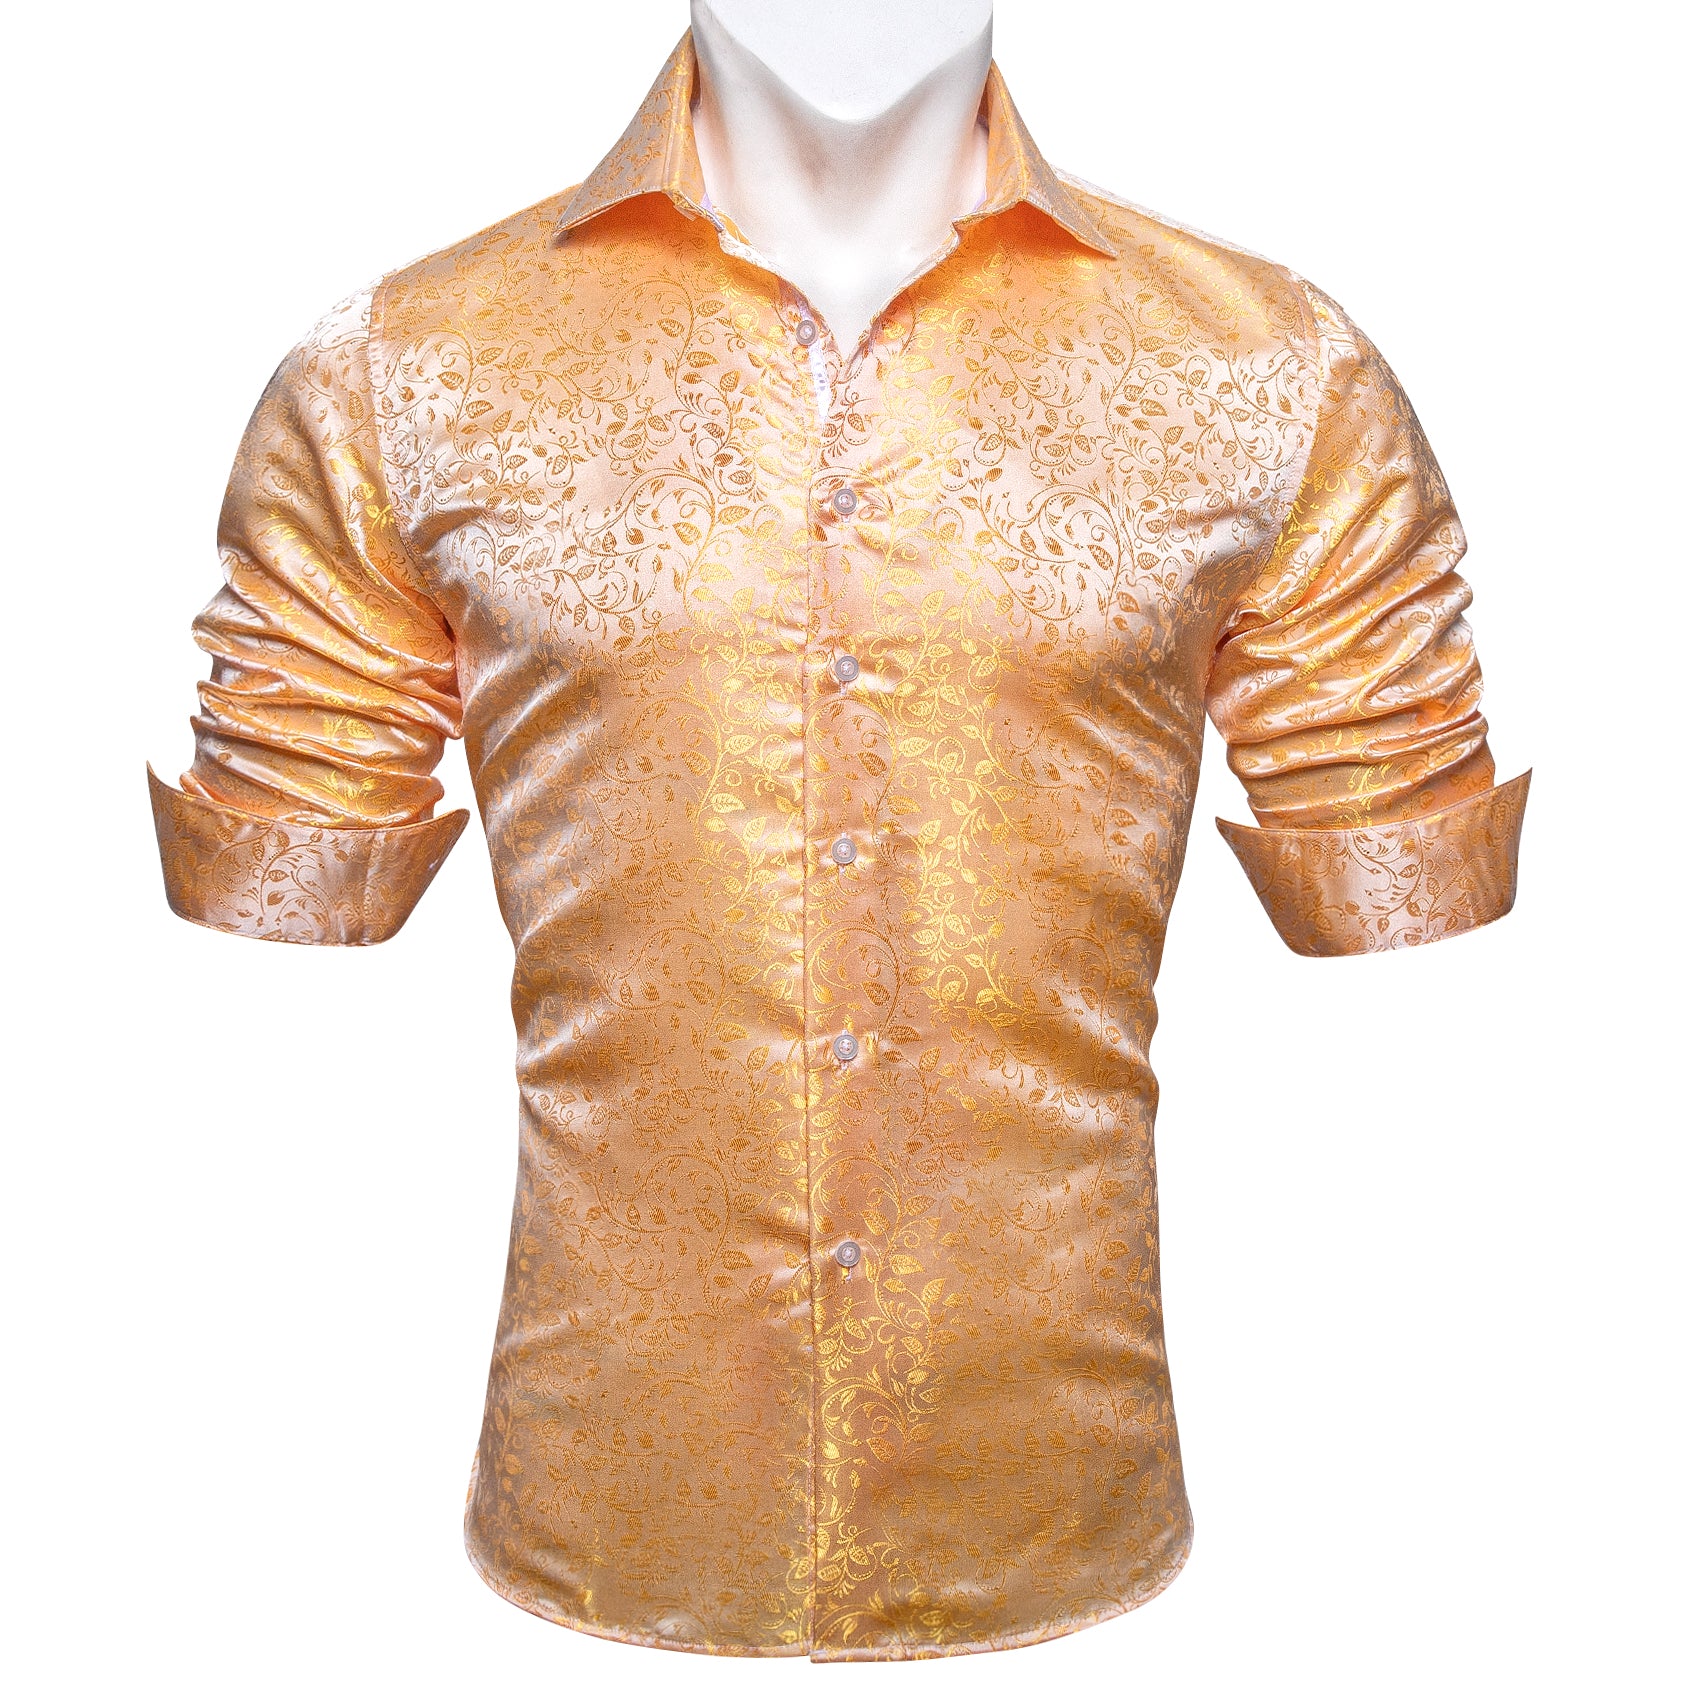 Barry.wang Orange Leaves Floral Silk Shirt